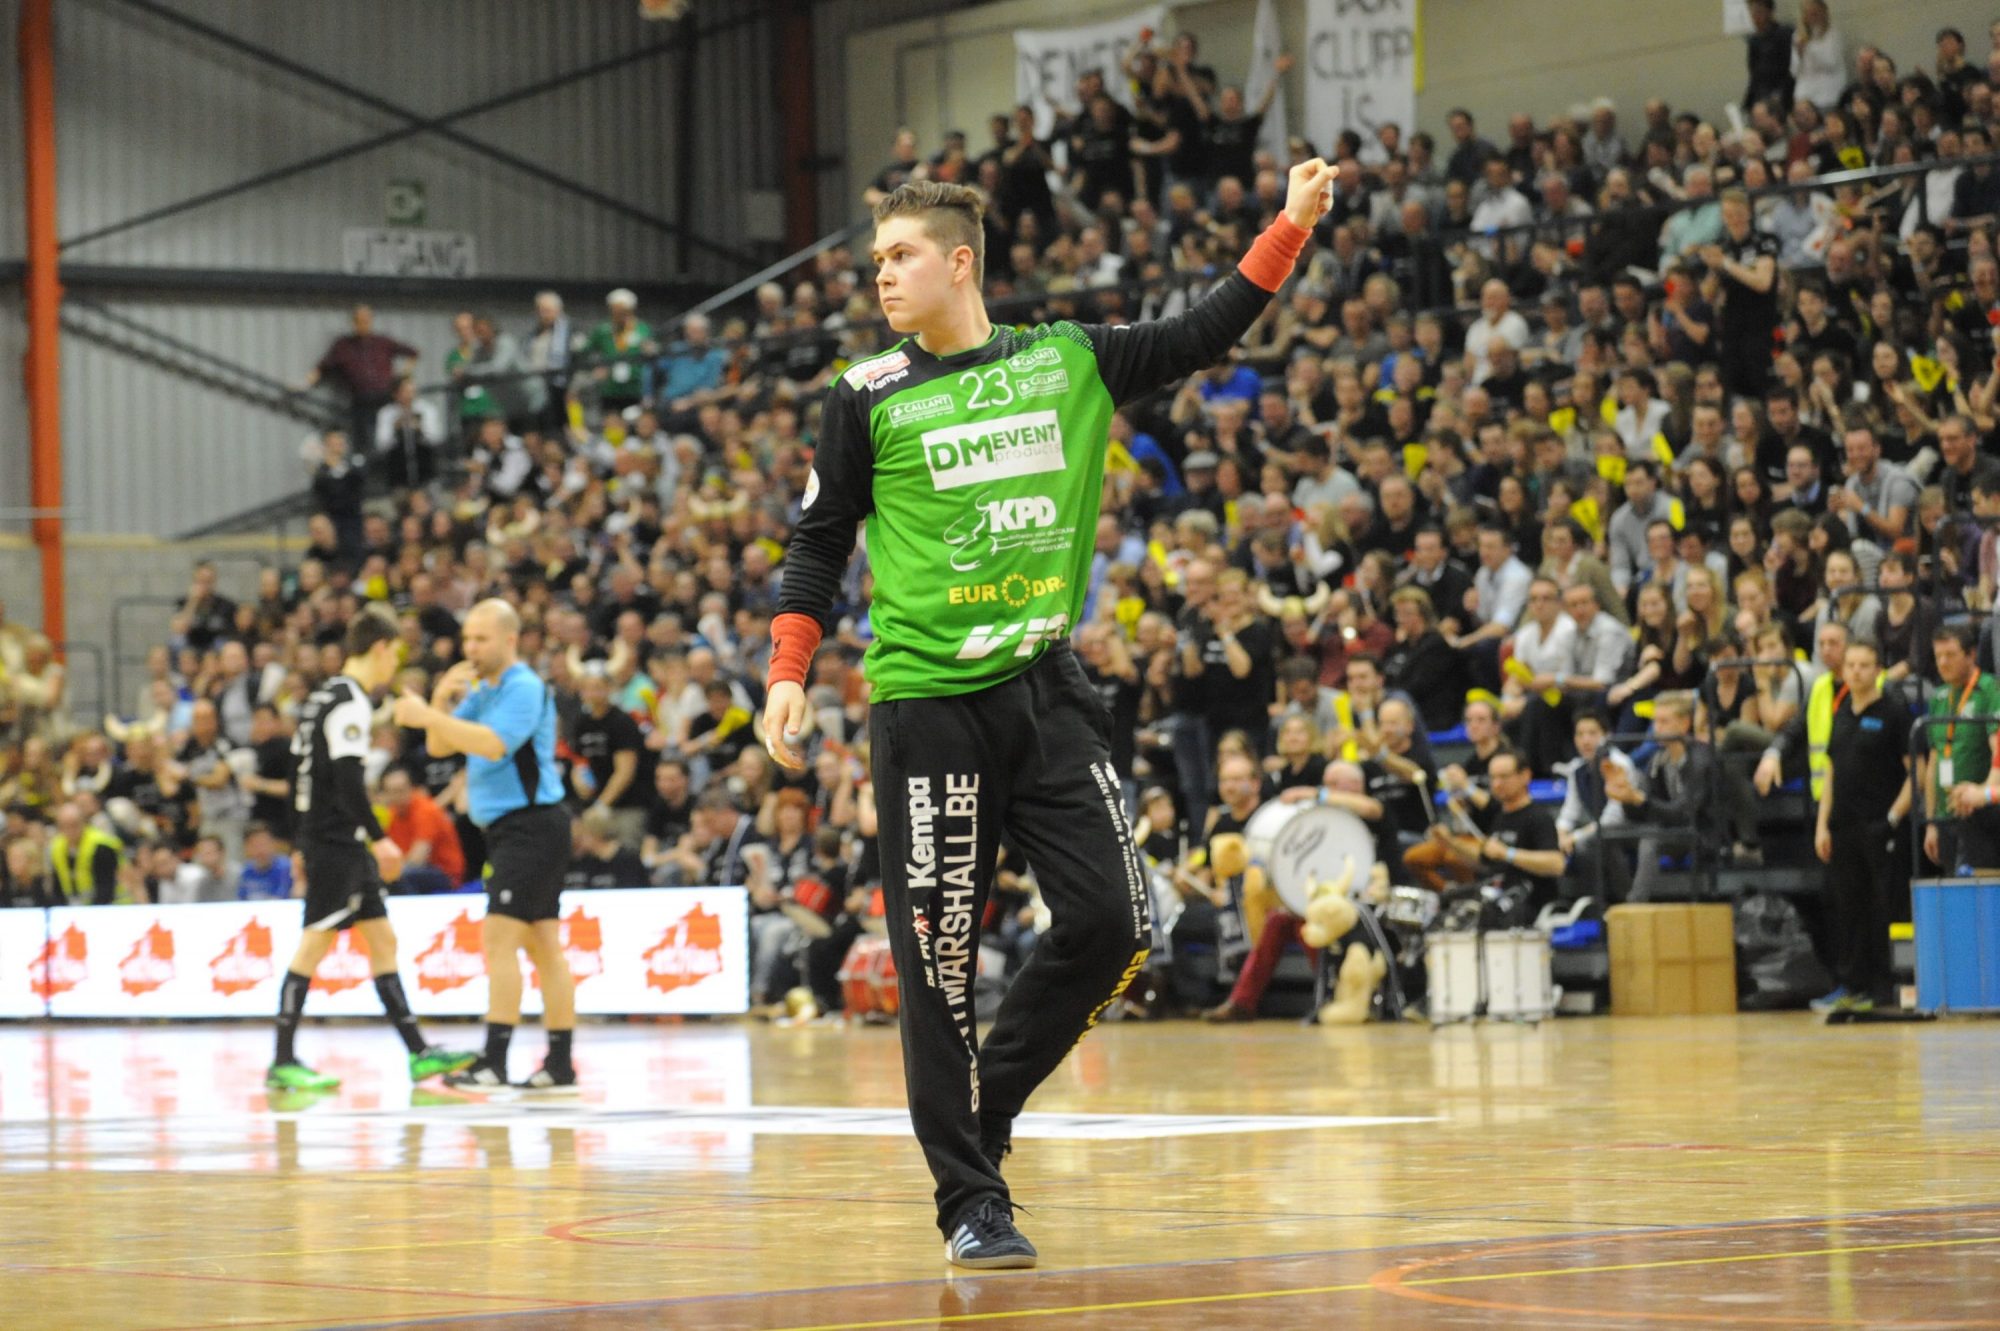 2016 gewann Youri Denert mit Tongeren den Handball-Landespokal